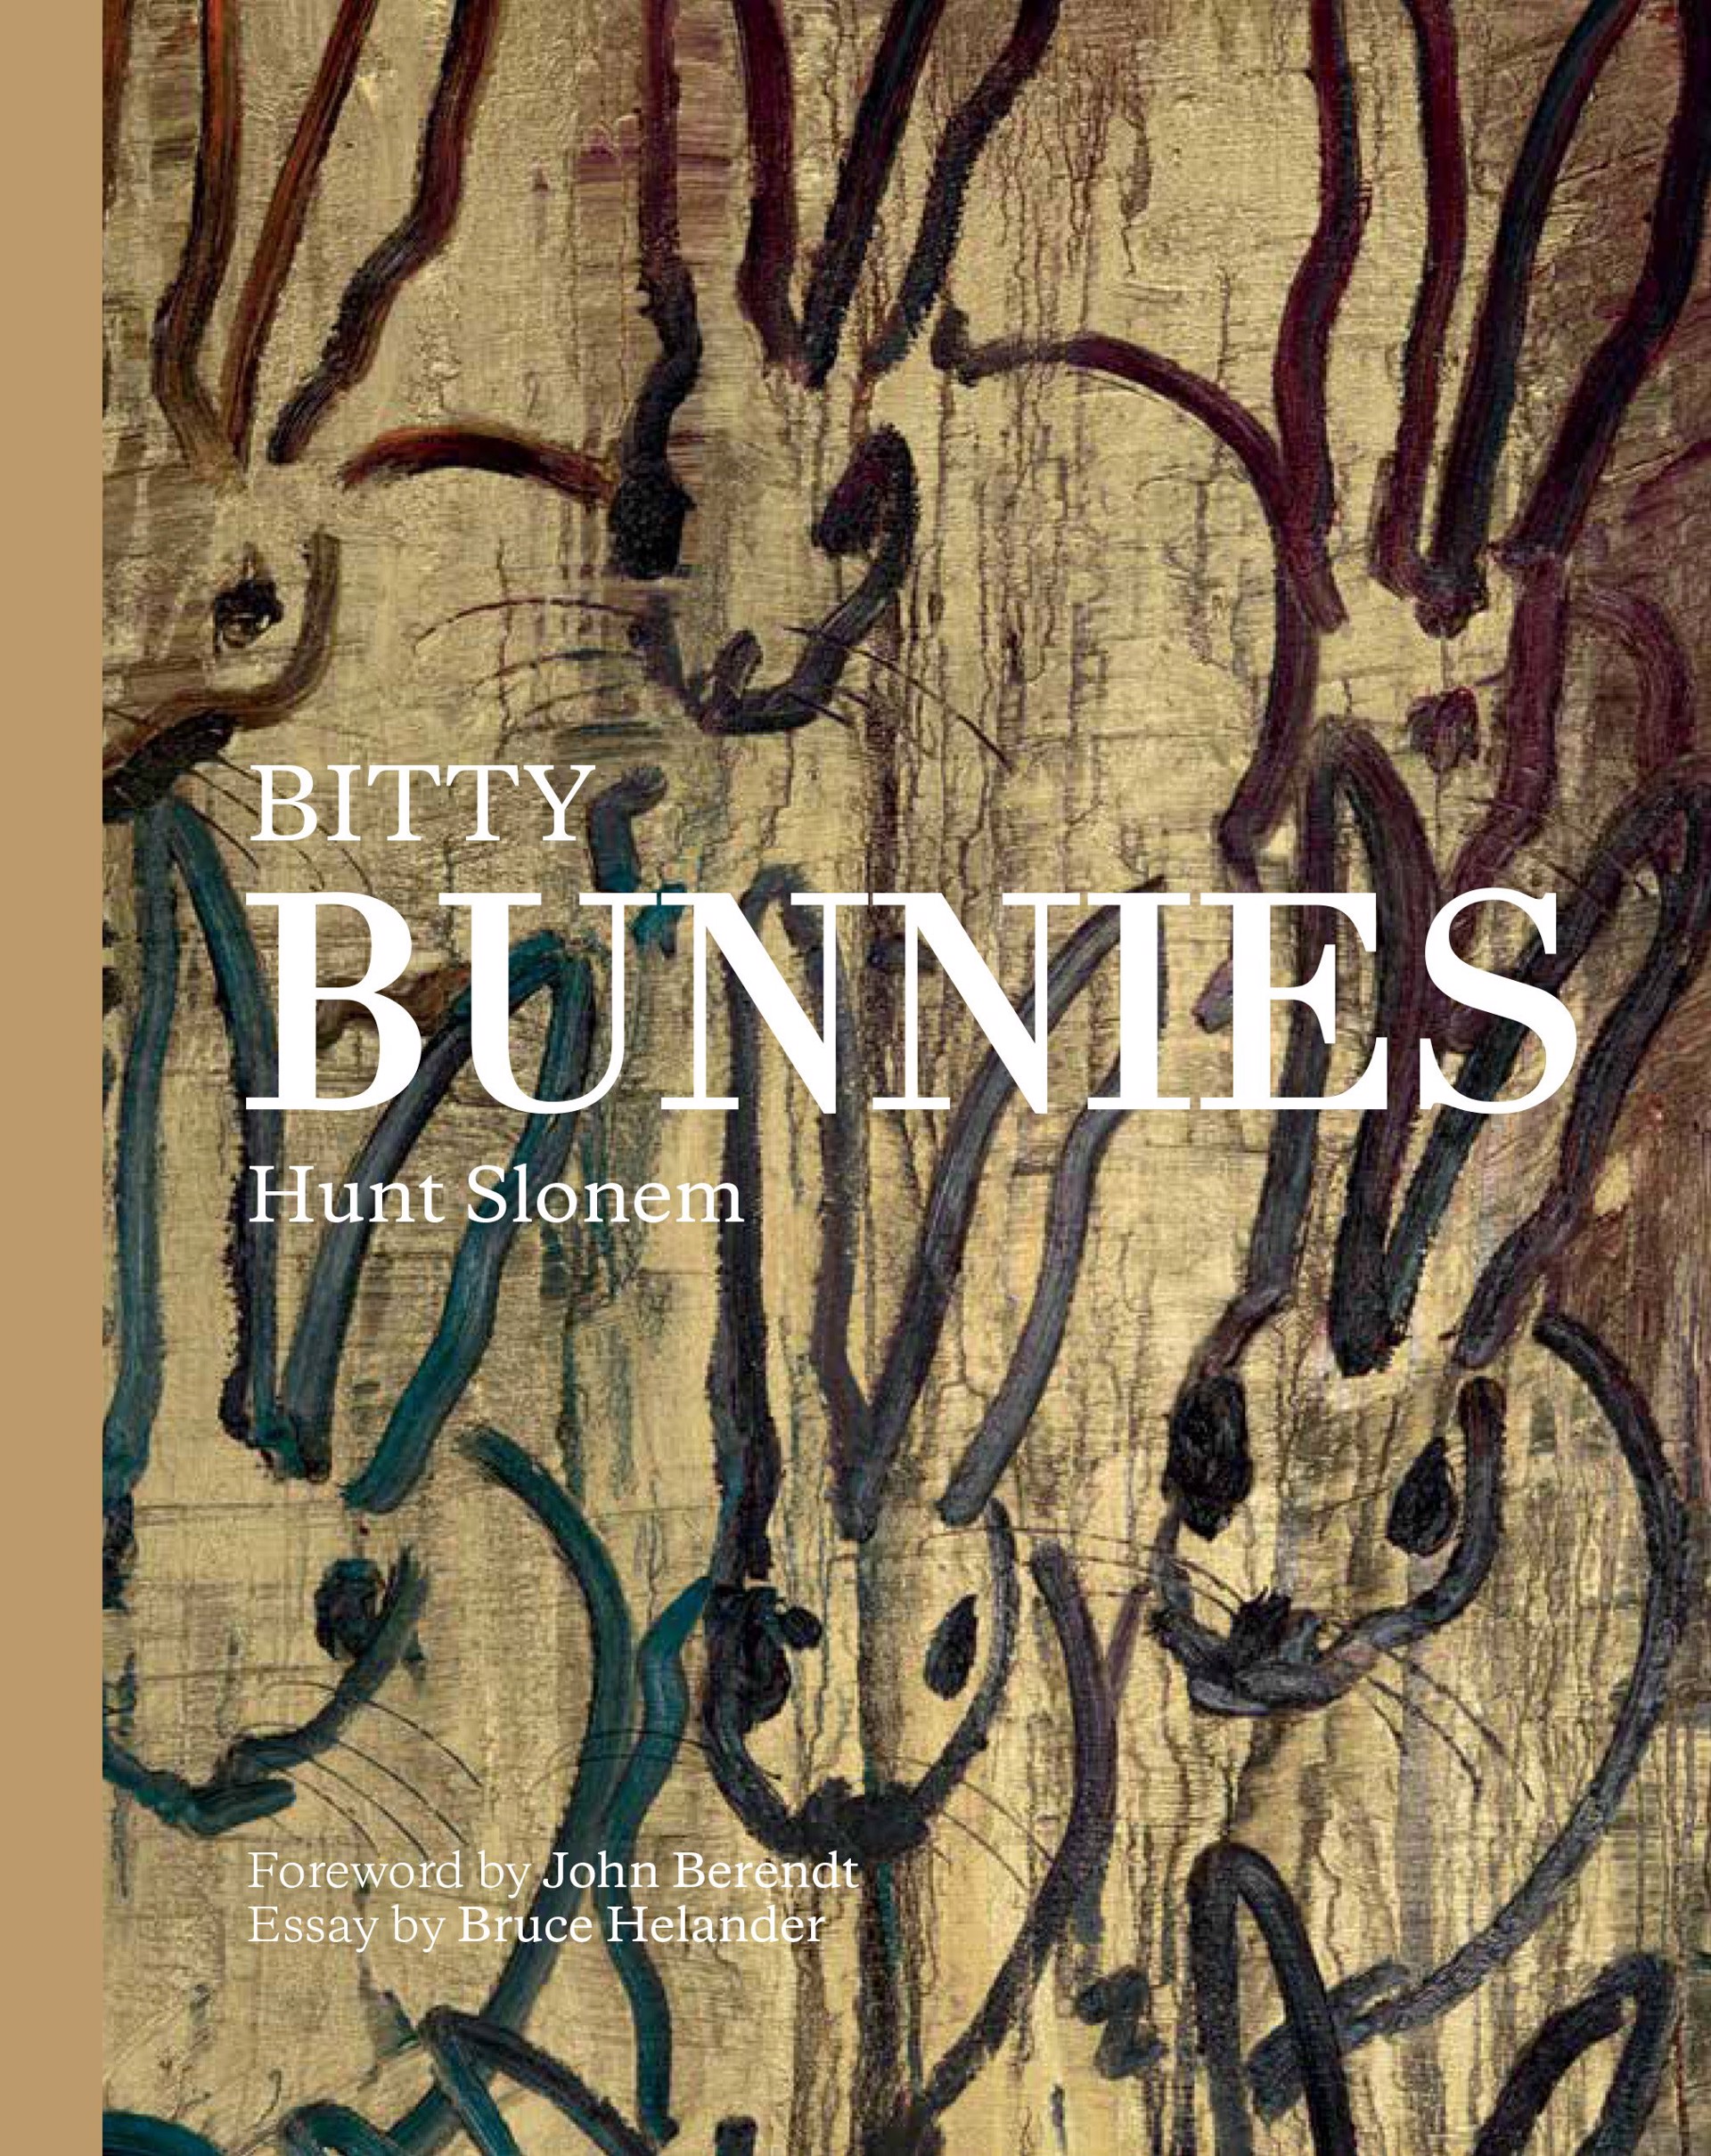 Bitty Bunnies by Hunt Slonem